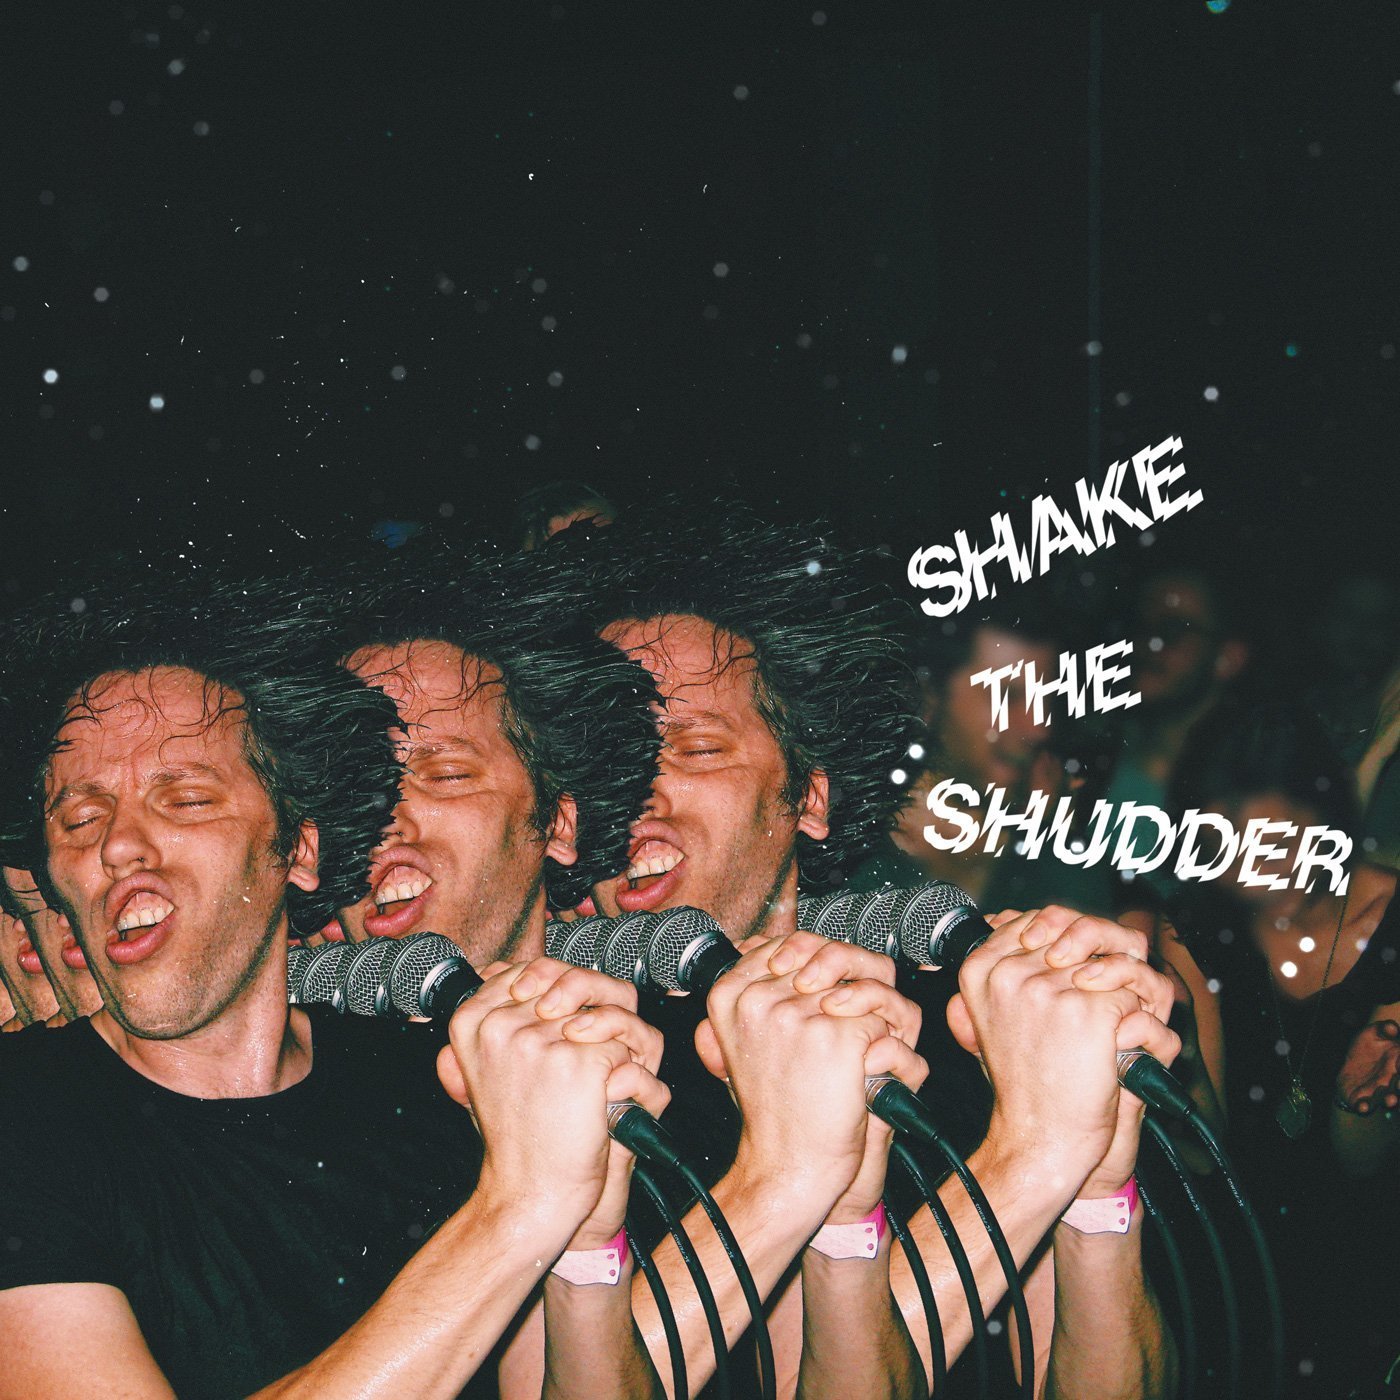 Chk chk chk "Shake the shudder" LP